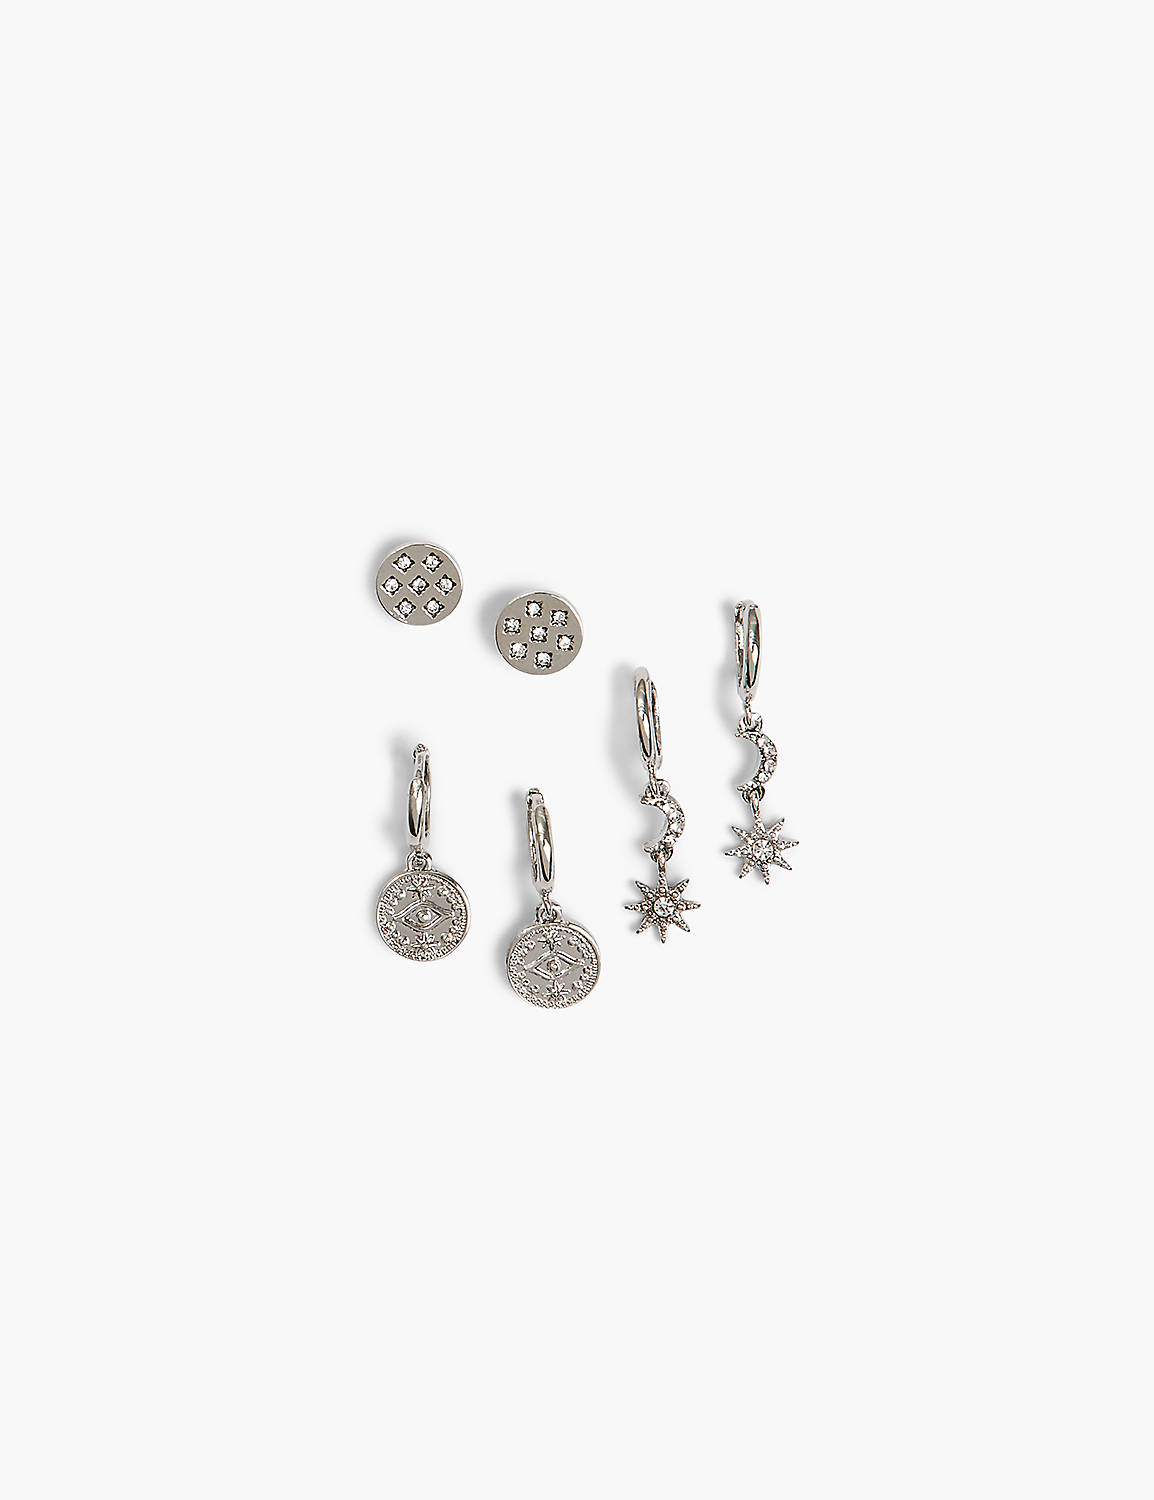 lane bryant celestial charm earrings 3-pack onesz silver